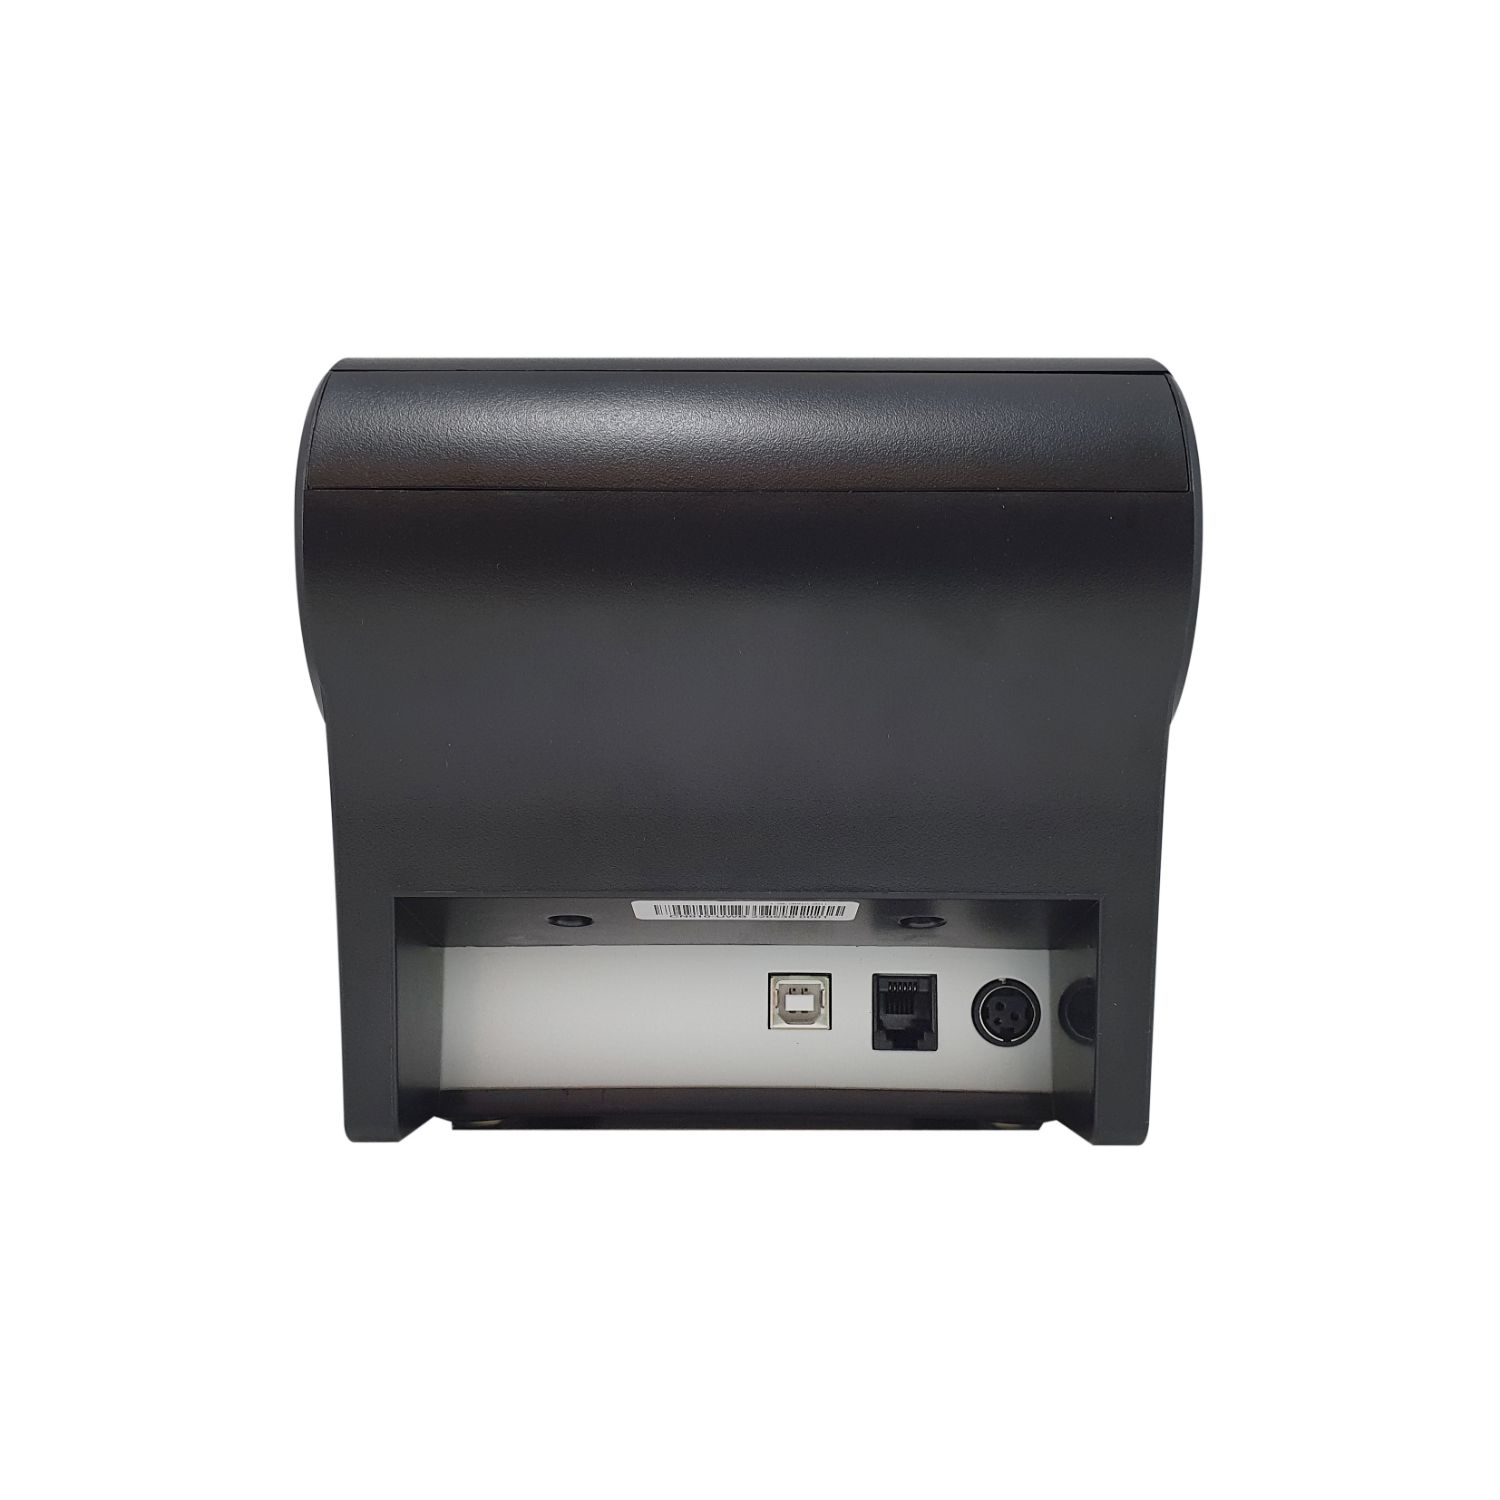 EQ351002 - Impresora Trmica EQUIP 80mm 203x203dpi USB-B 2.0 RJ11 Corte Manual/Automtico Negra (EQ351002)